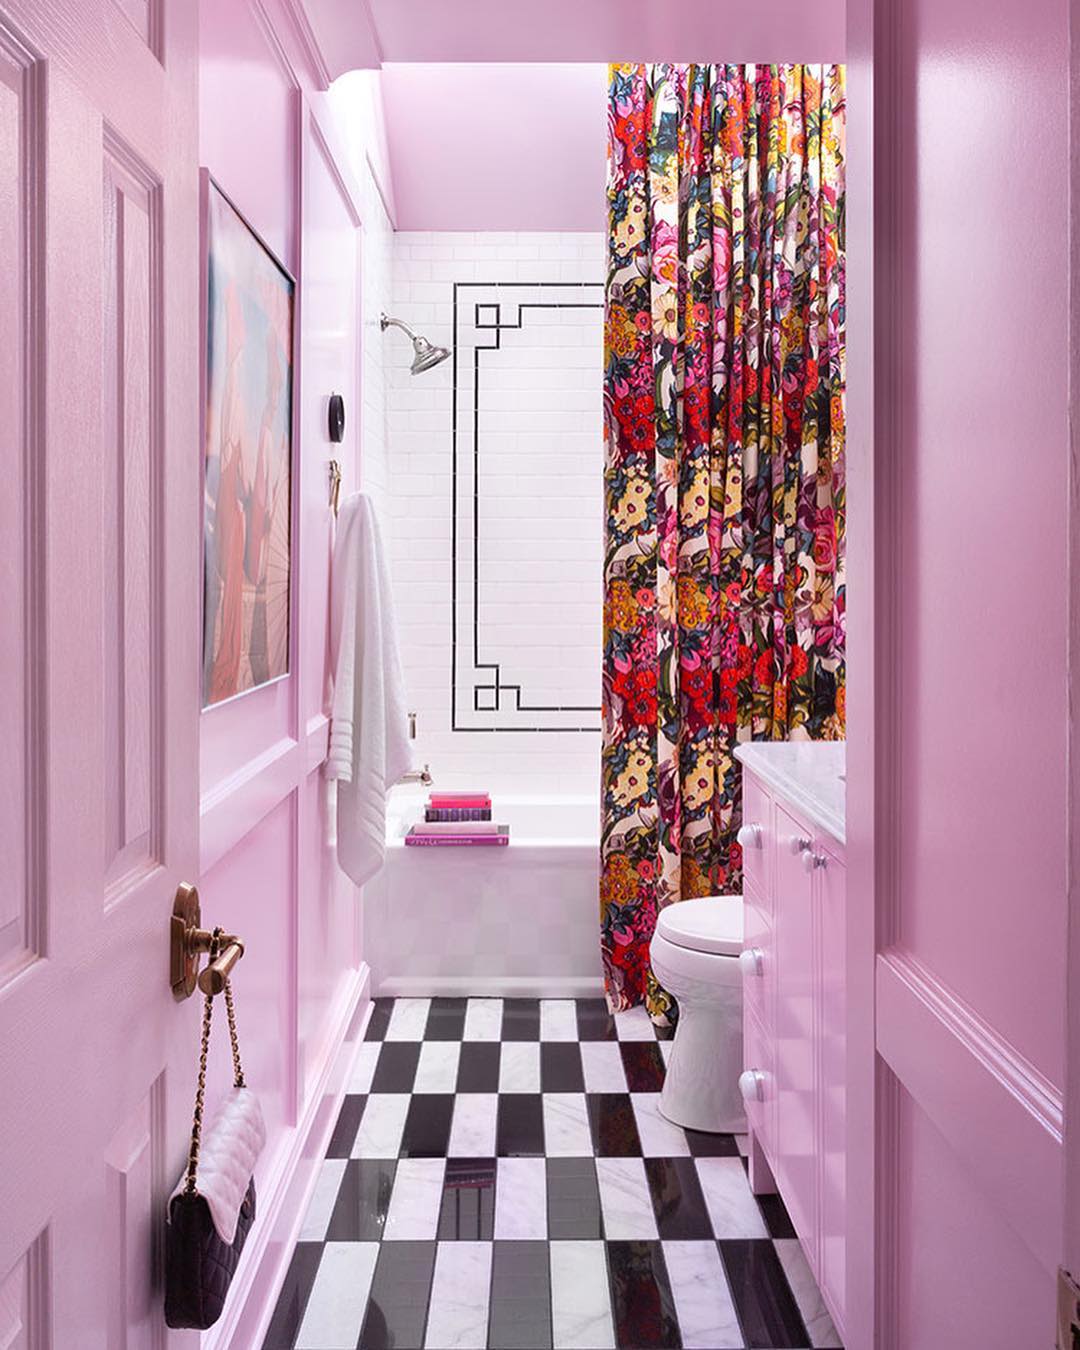 30 Shabby Chic Bathroom Ideas: Charming, Cozy, Classy - Foter